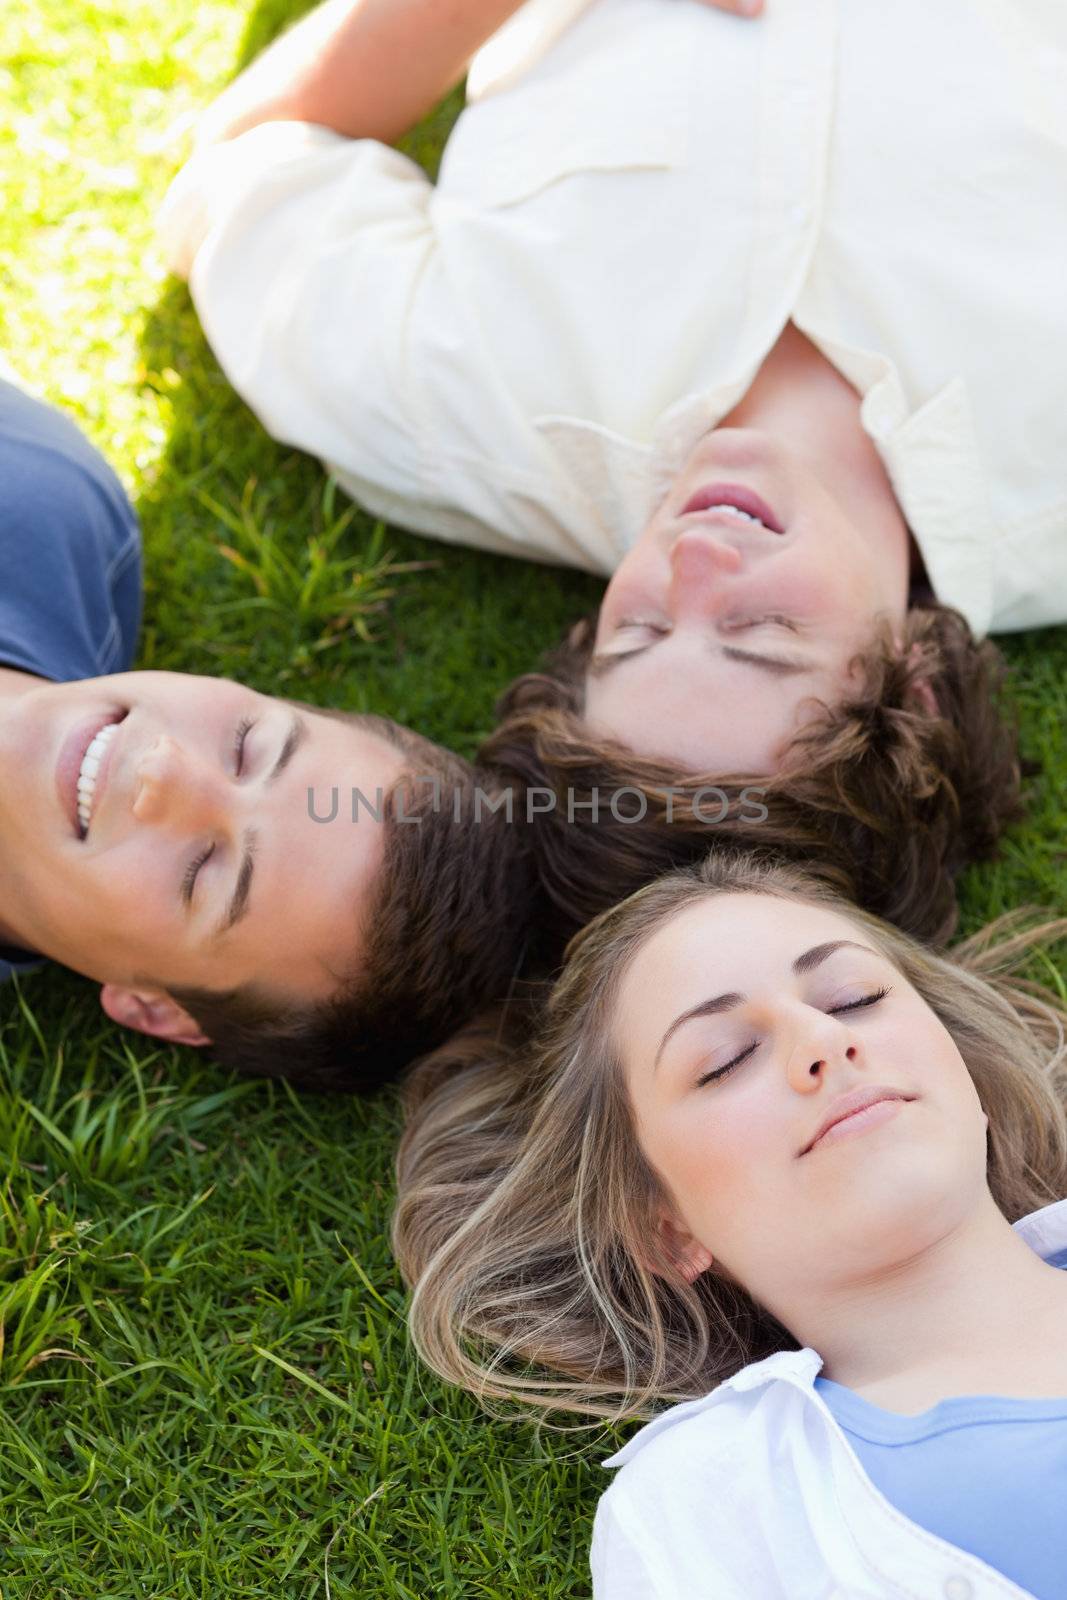 Three happy students resting together by Wavebreakmedia